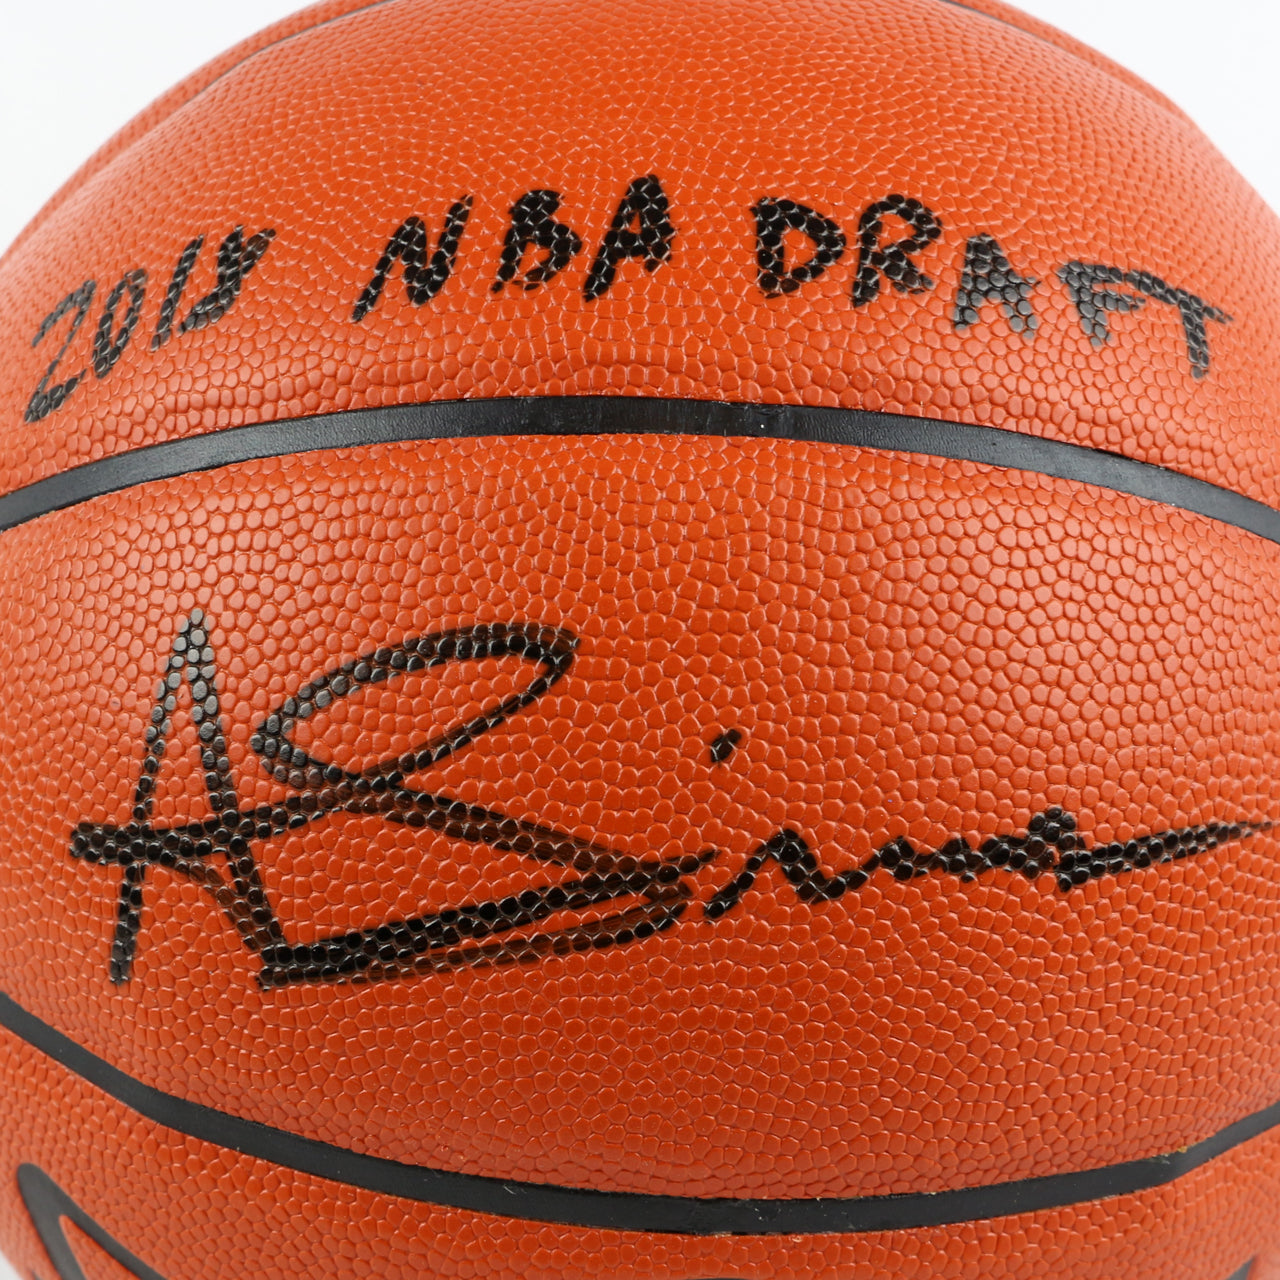 Anfernee Simons Signed Spalding Basketball Inscribed "2018 NBA Draft"